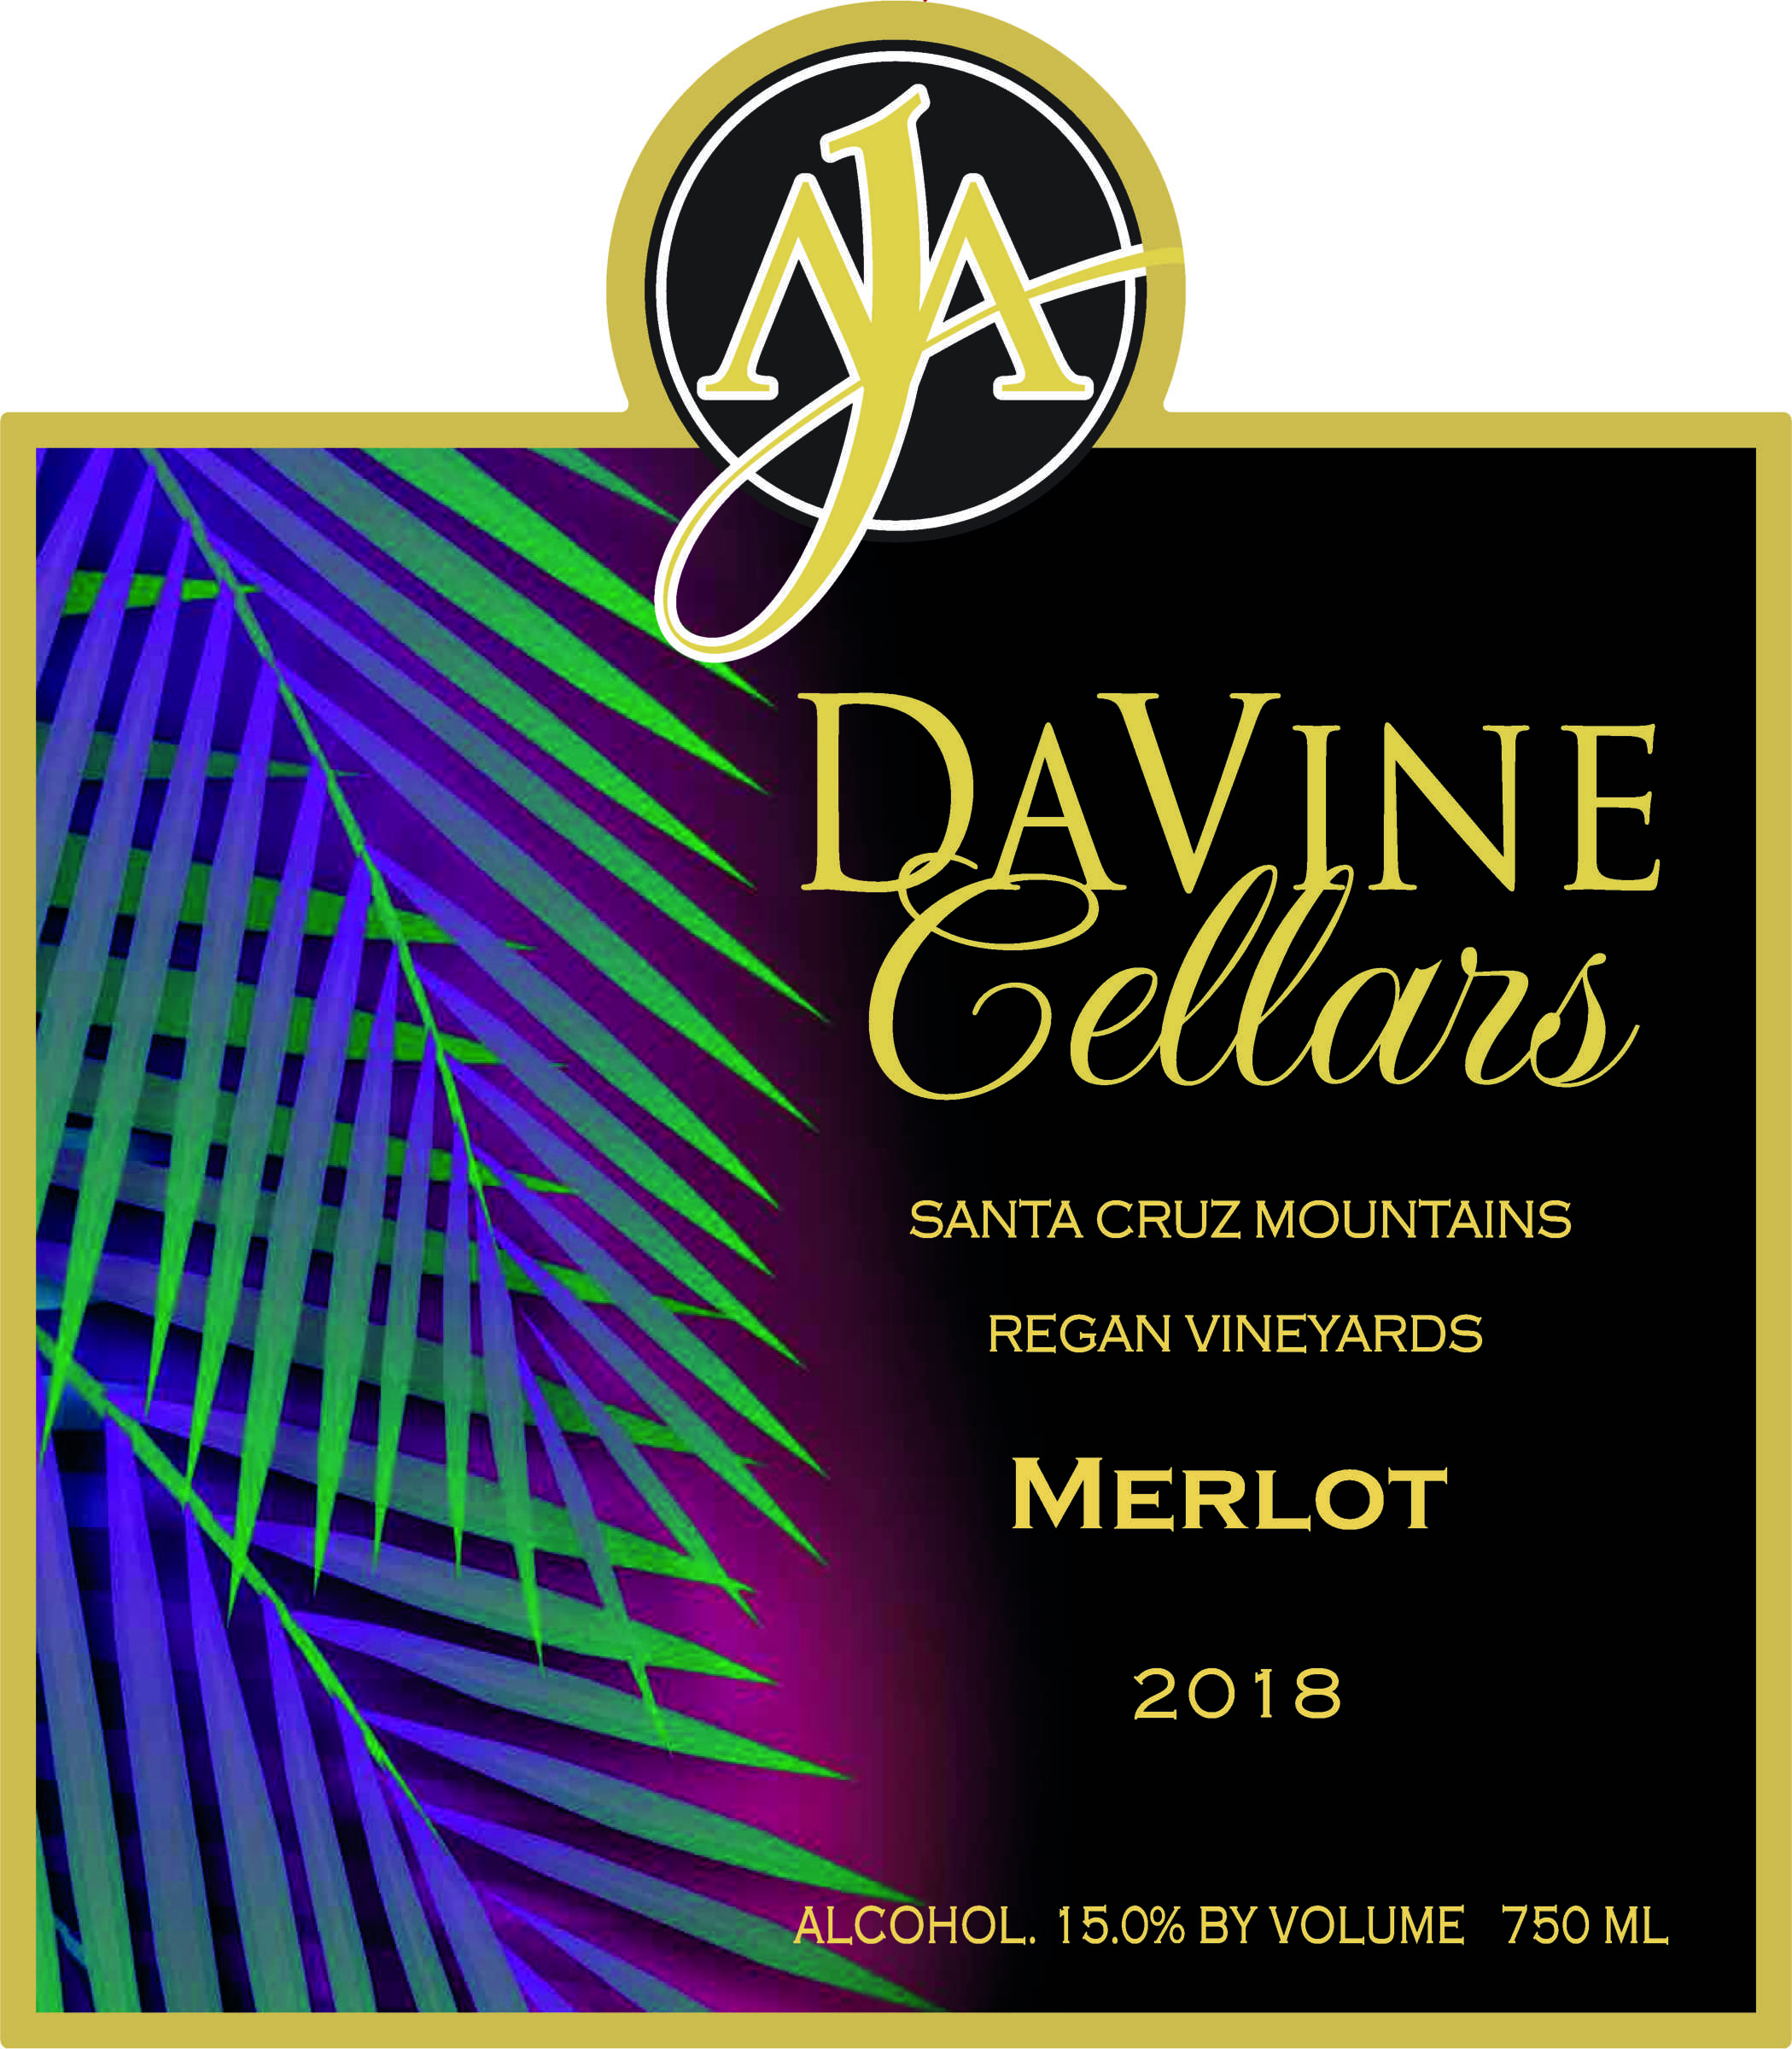 Product Image for 2018 Santa Cruz Mountains Merlot "Sideways"